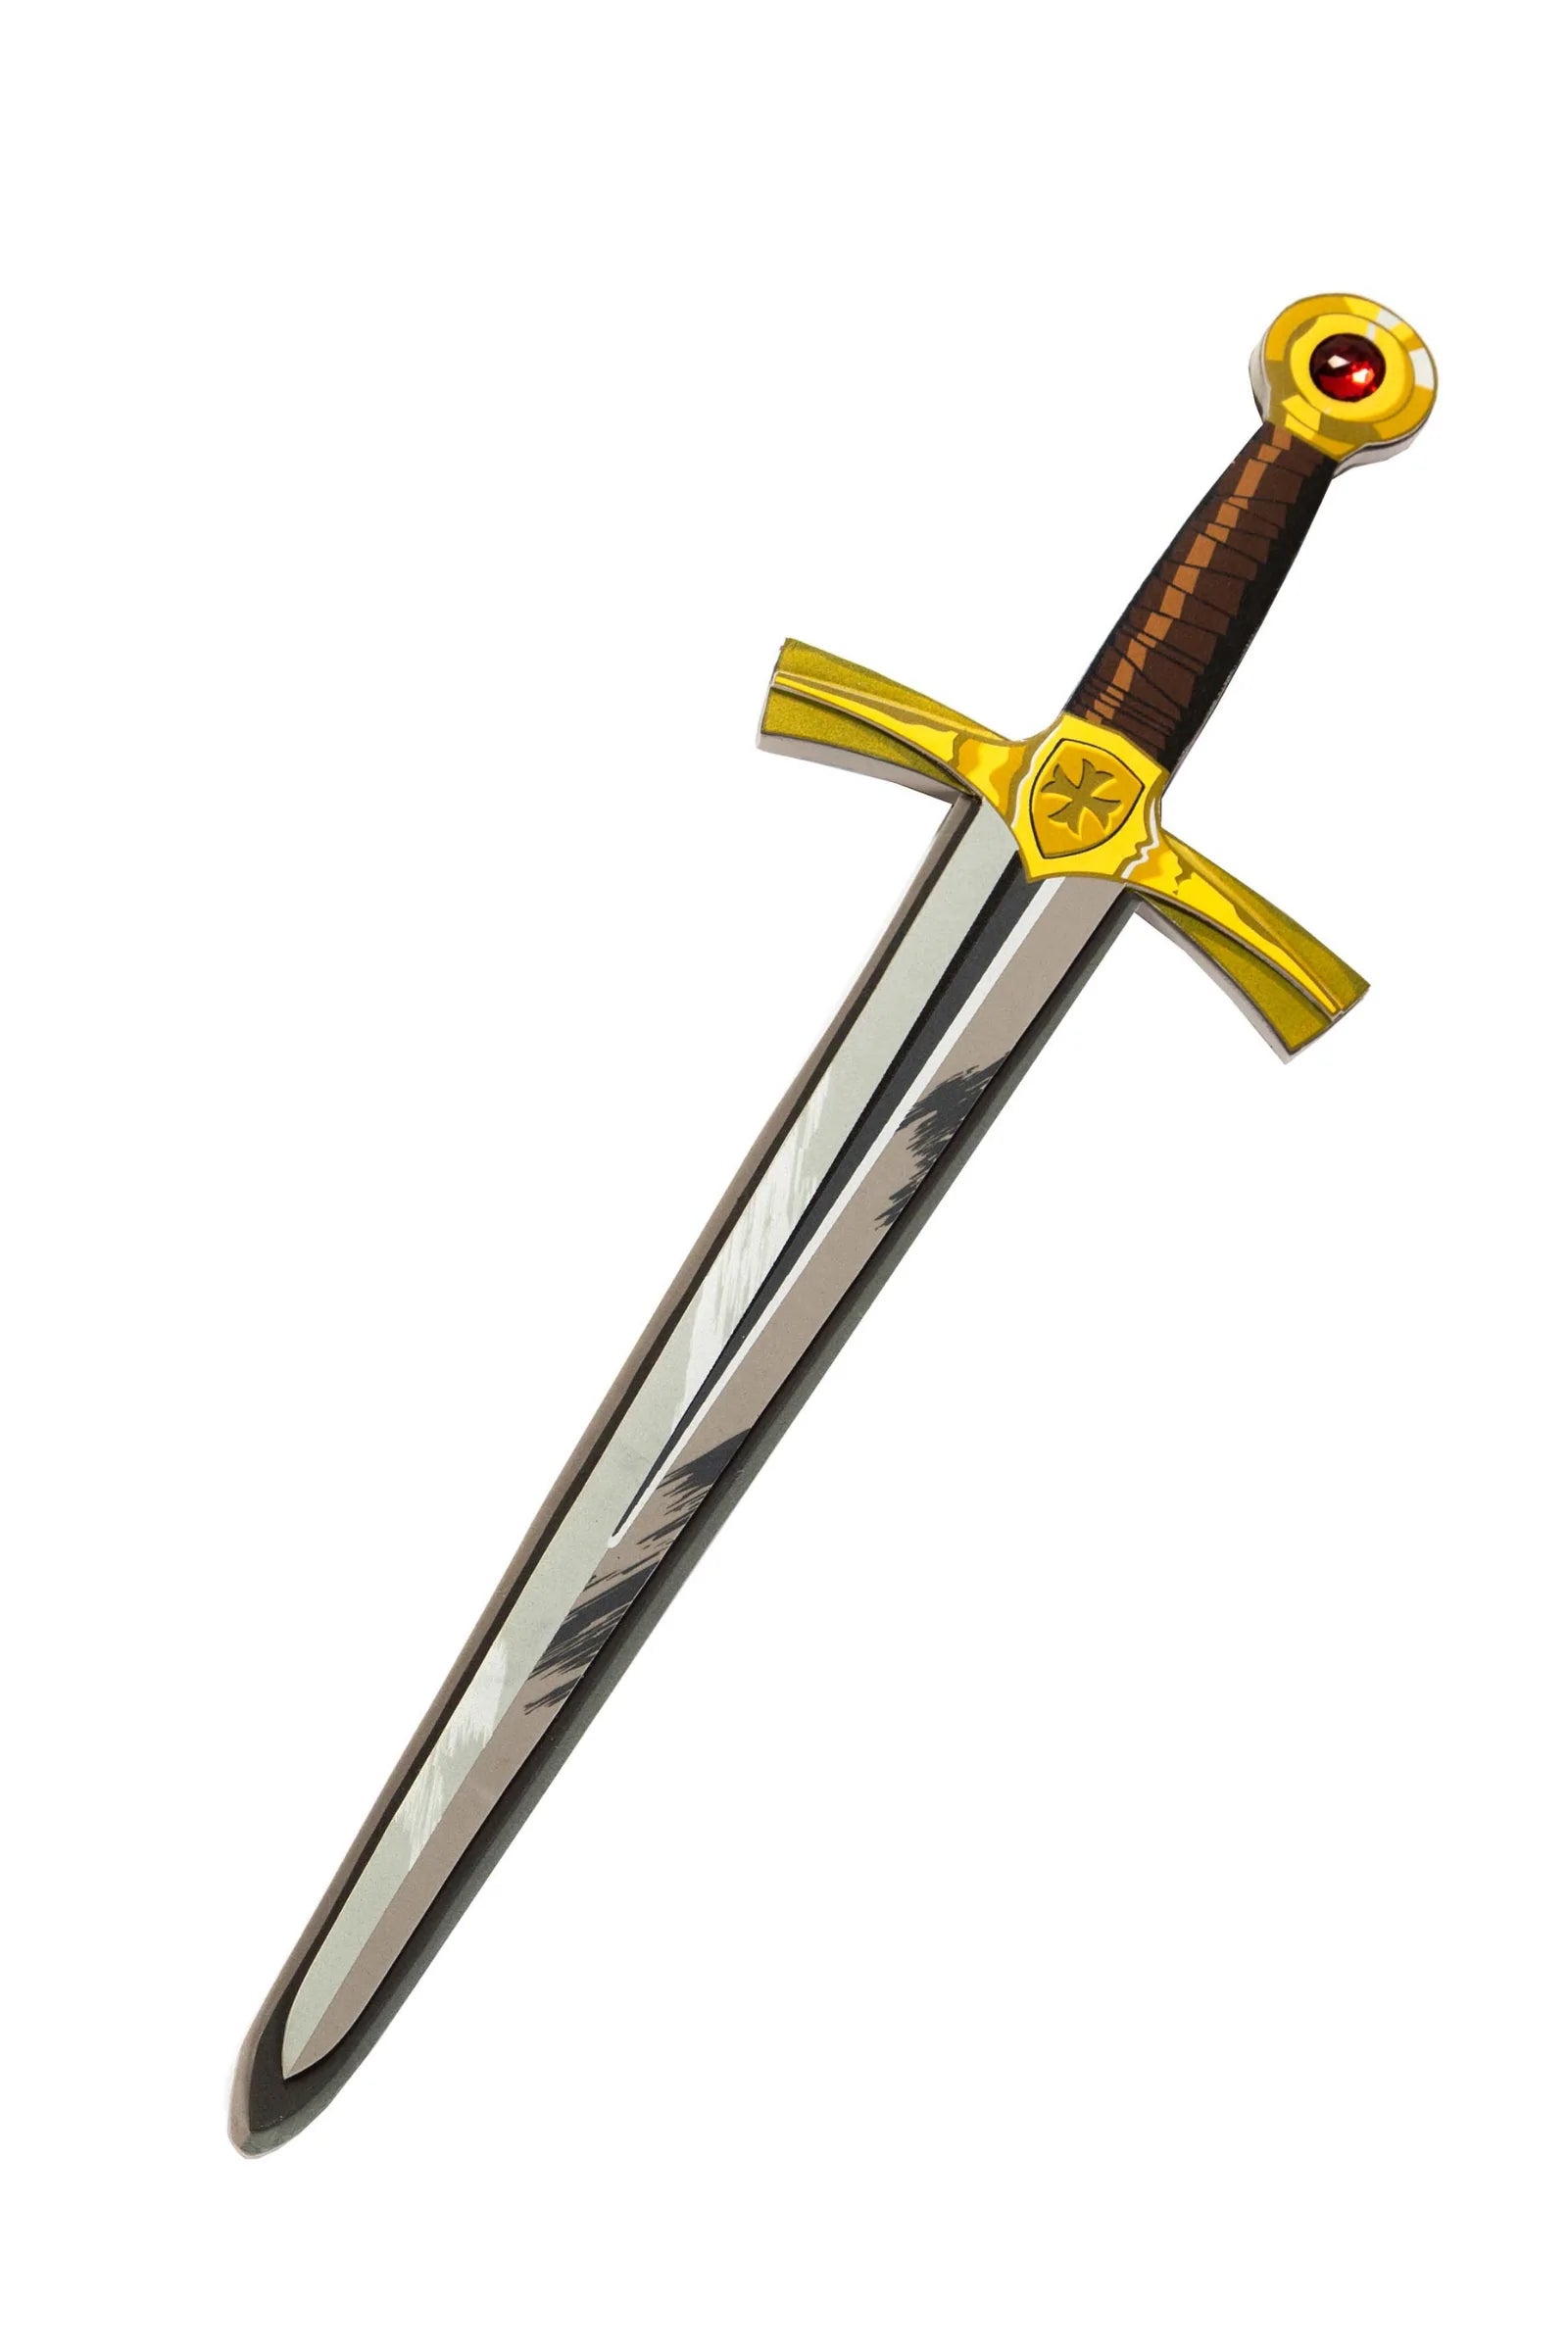 Crusader Printed Sword | Great Pretenders